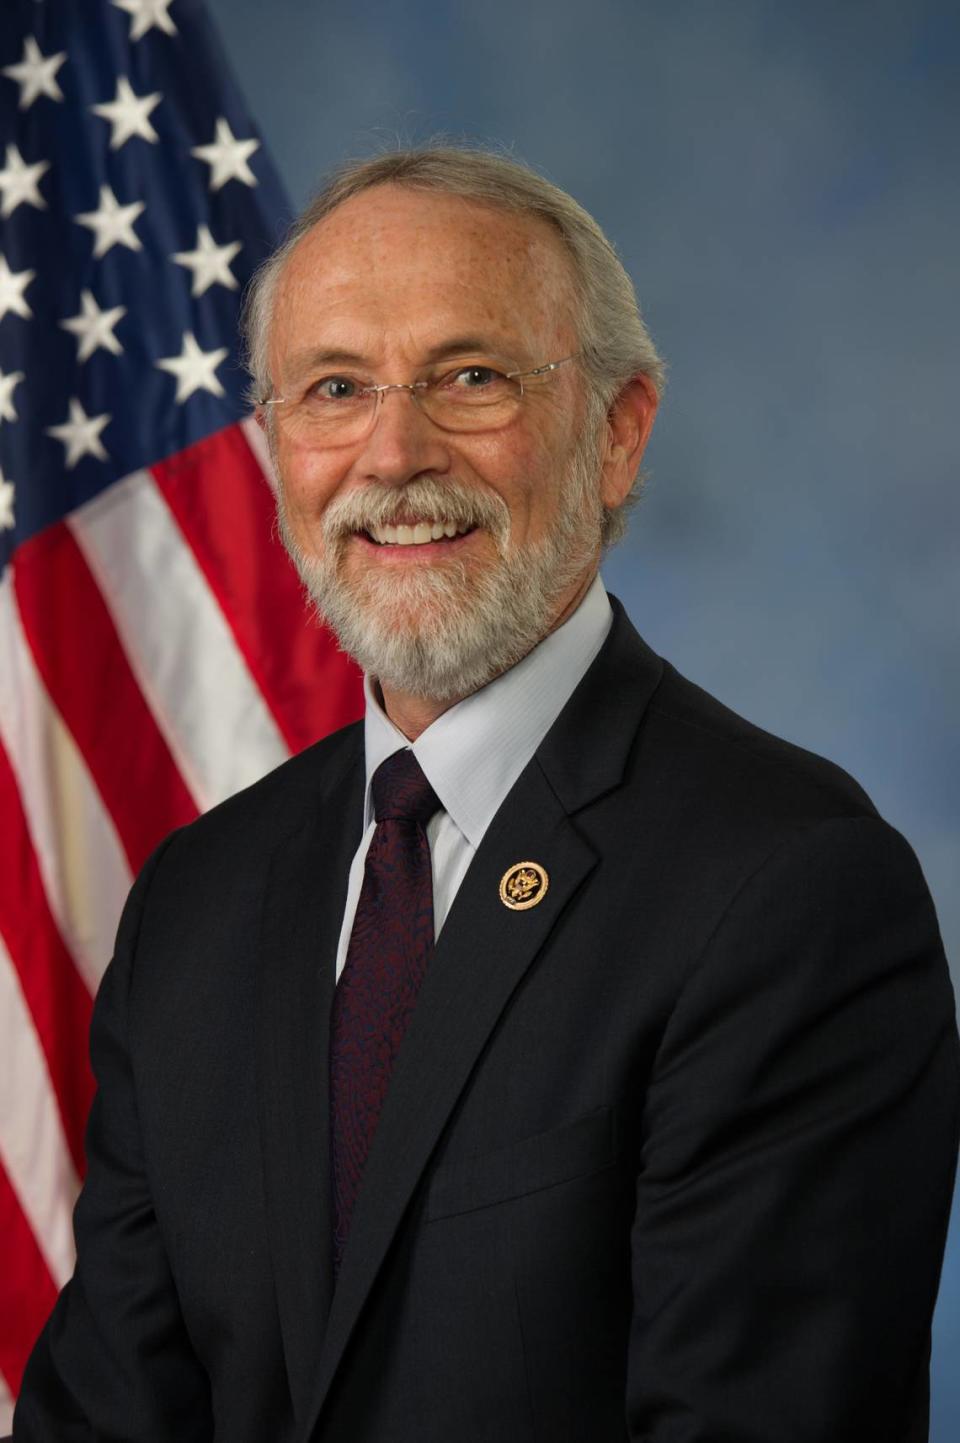 Rep. Dan Newhouse represents Washington’s 4th congressional district.